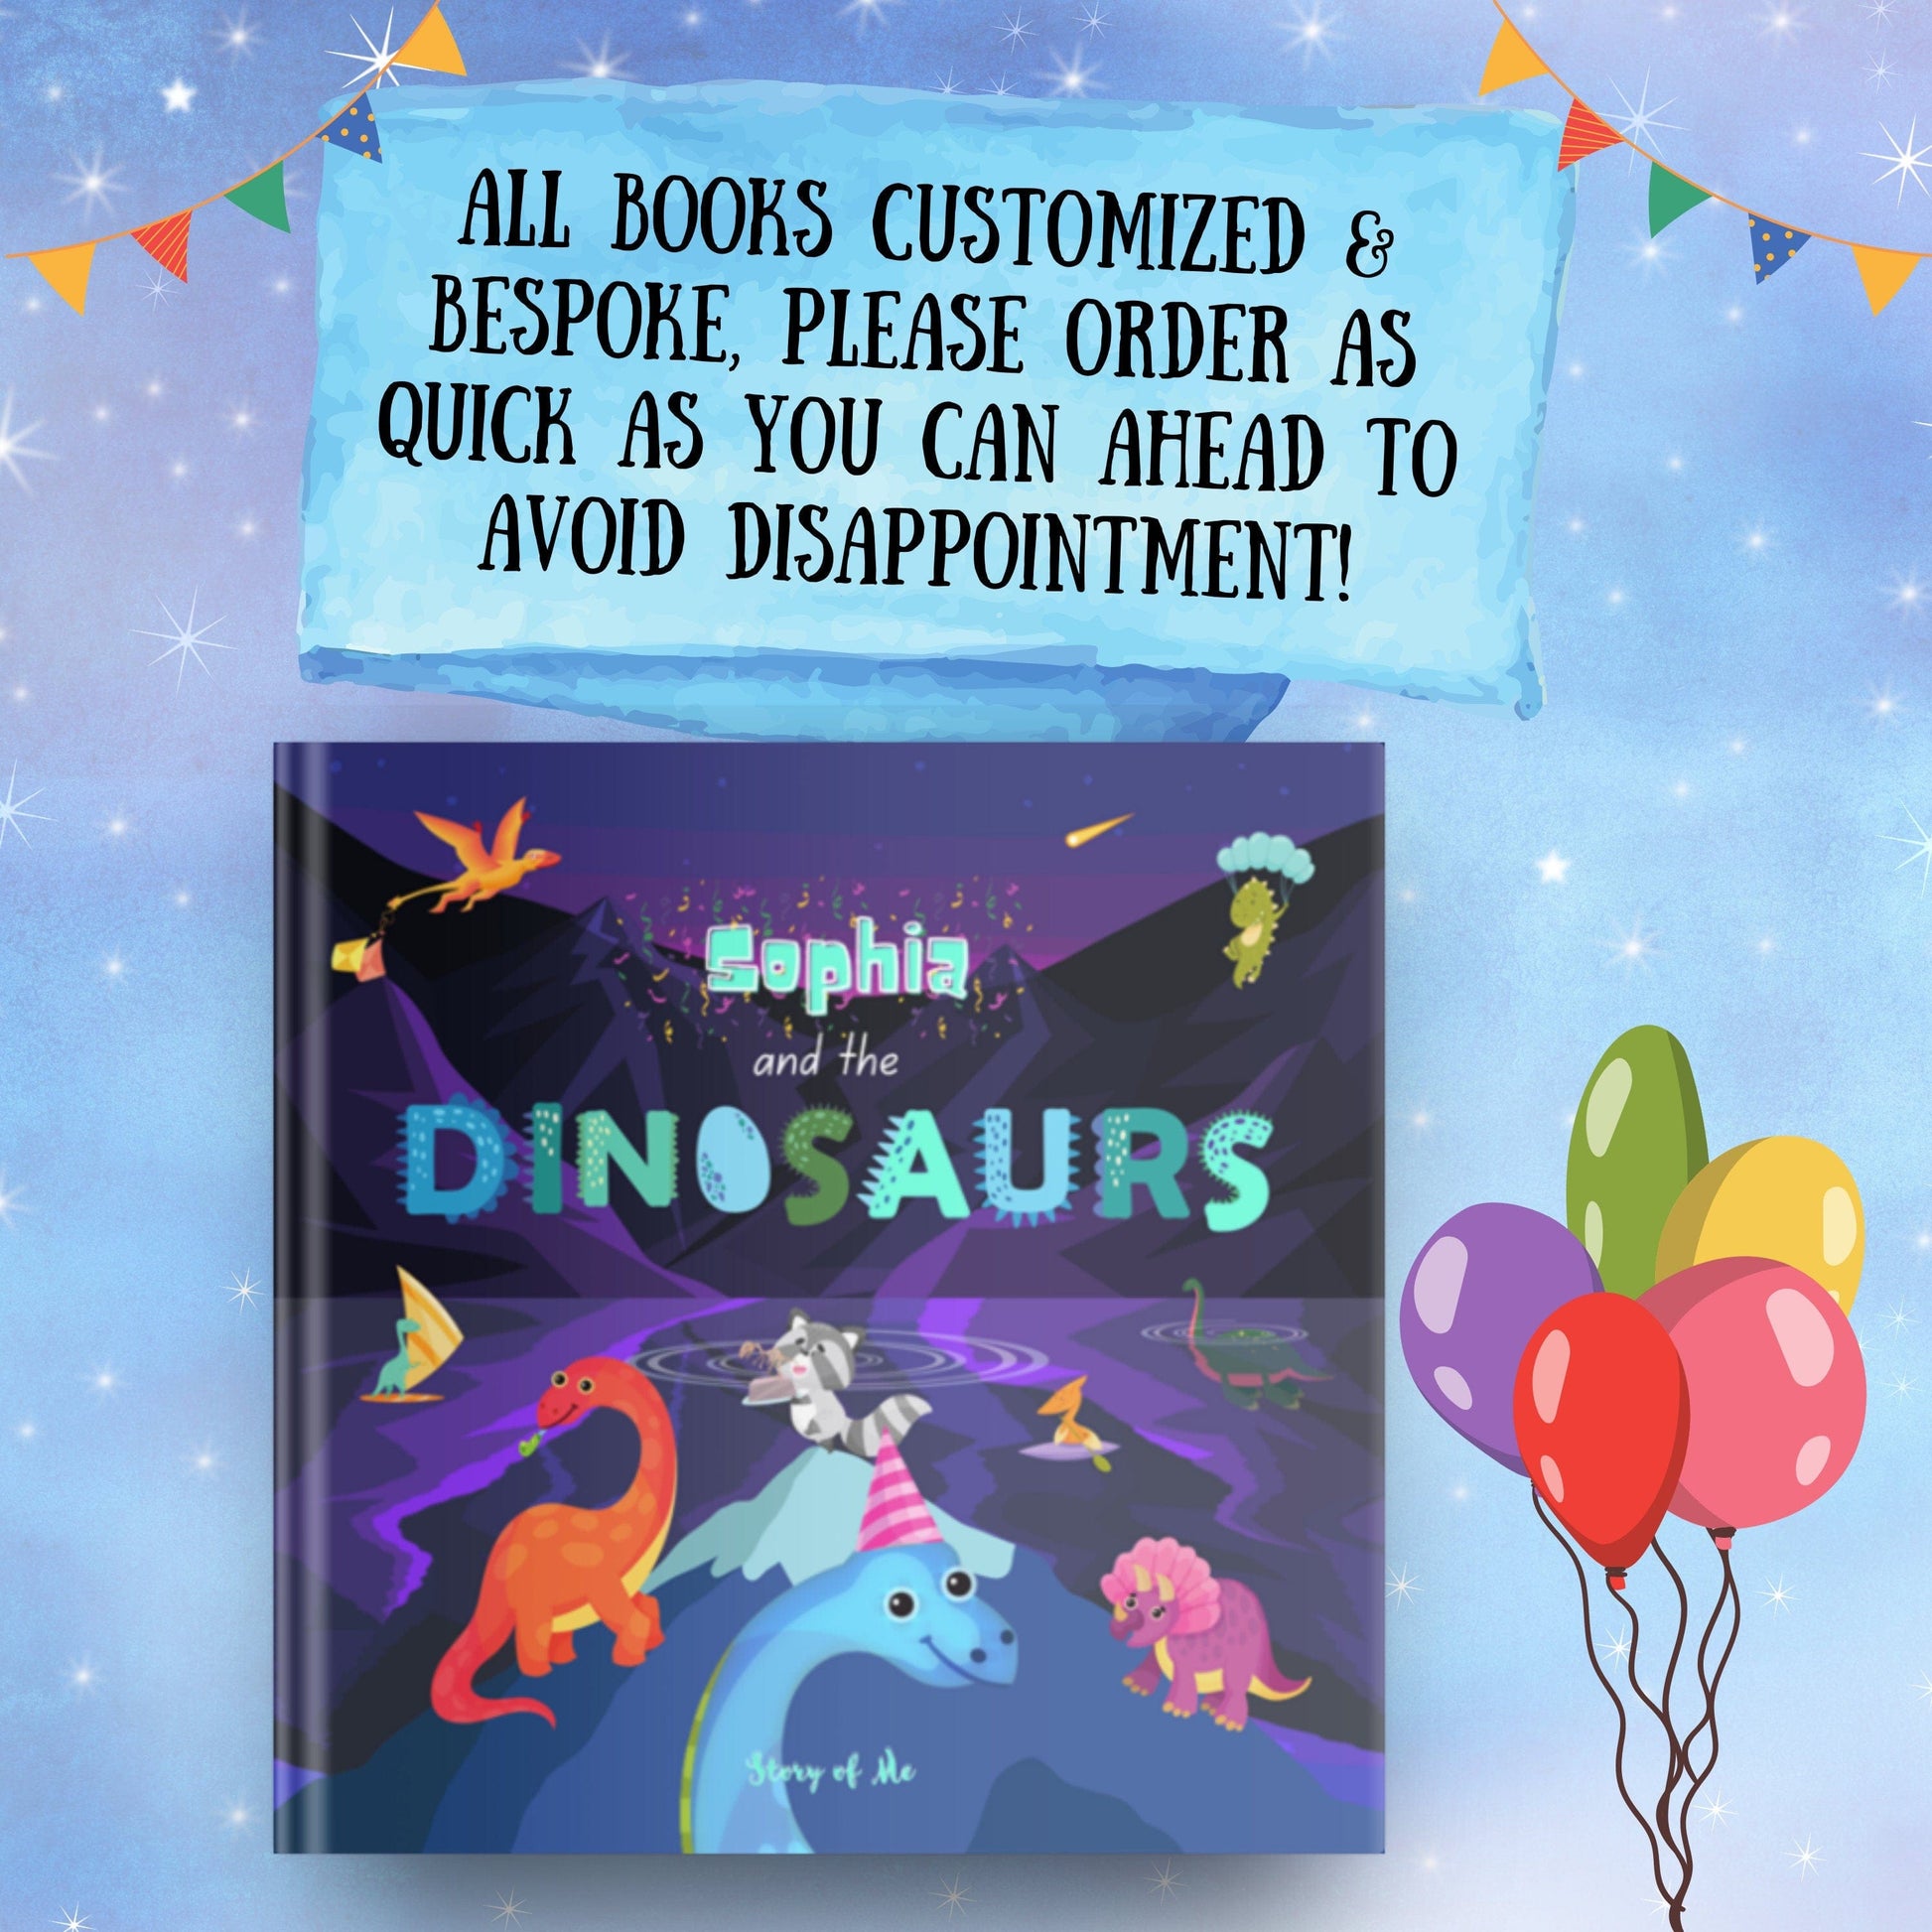 Personalized Book - Dinosaur Adventure - Custom Personalized Book w/child and family personalizations, great dinosaur gift for birthday